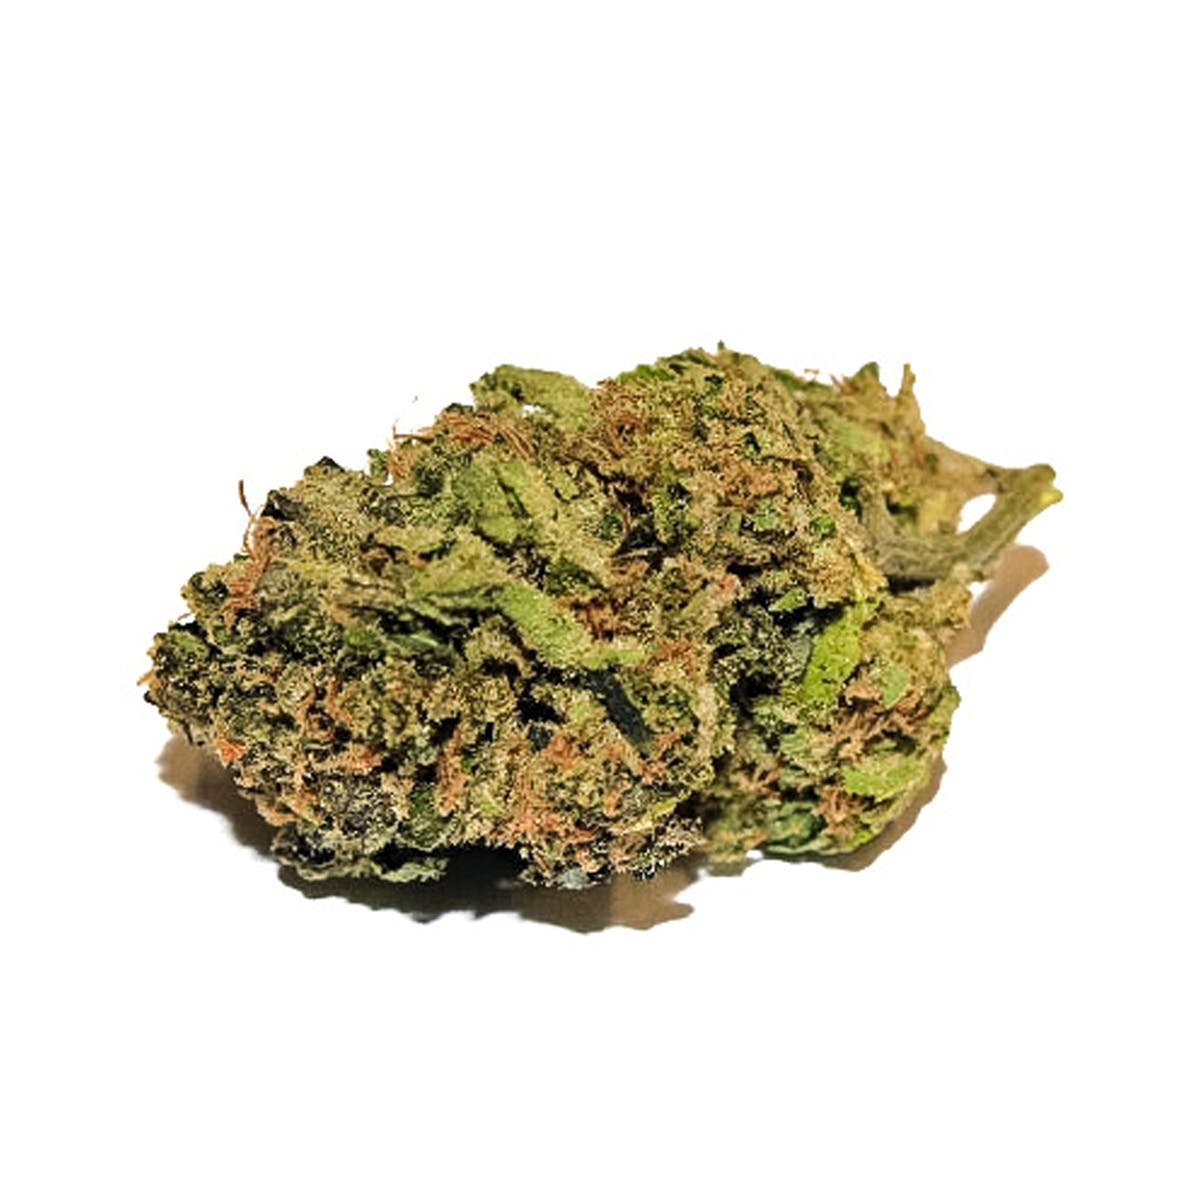 marijuana-dispensaries-storehouse-in-baltimore-brendas-gift